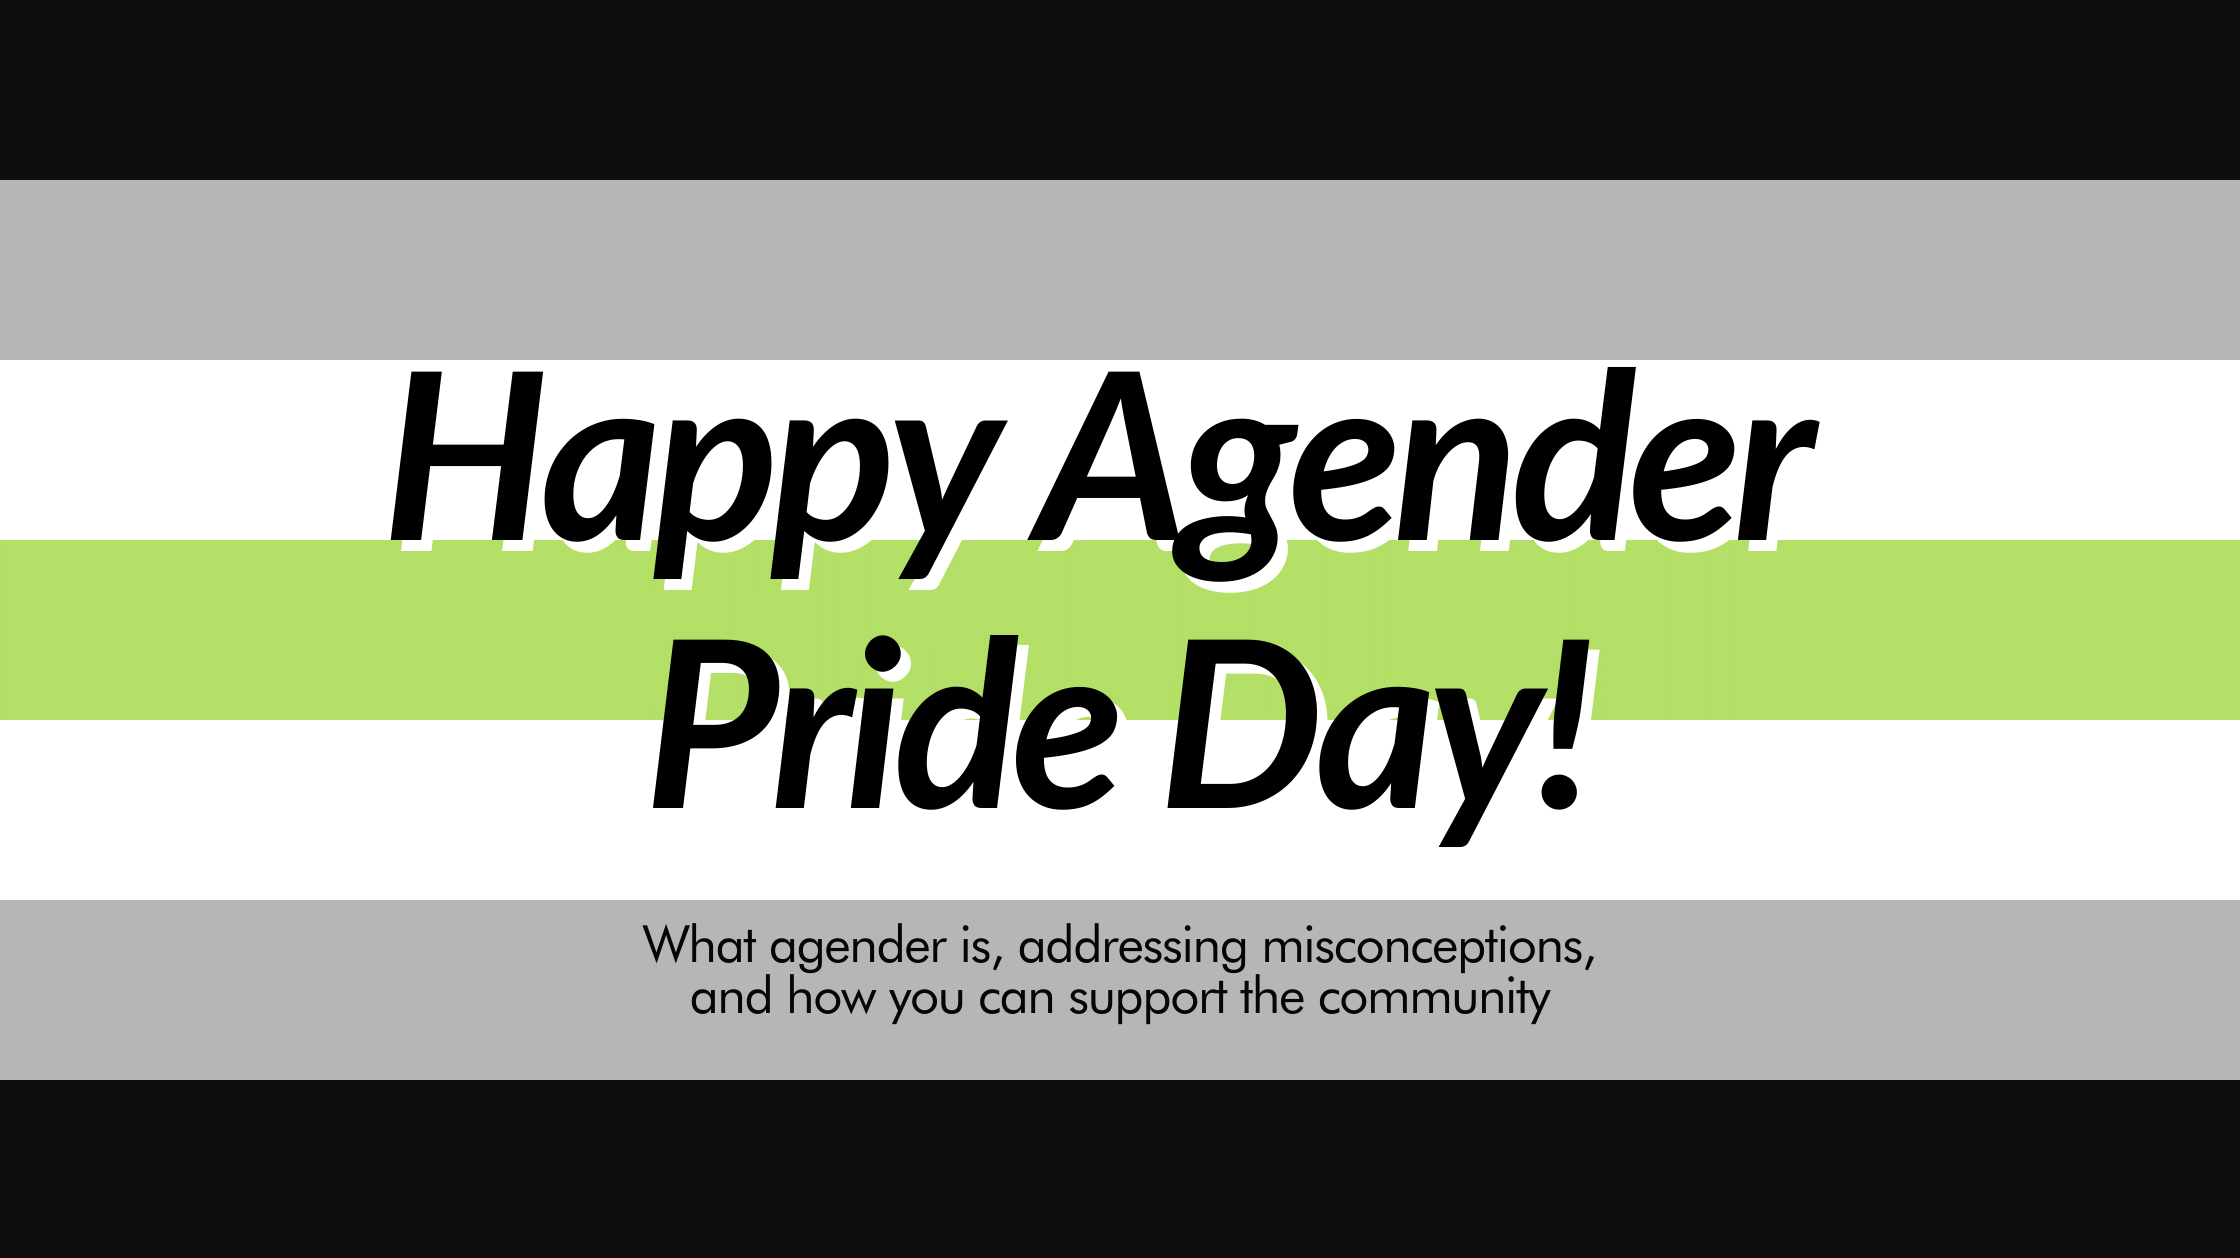 Happy Agender Pride Day!